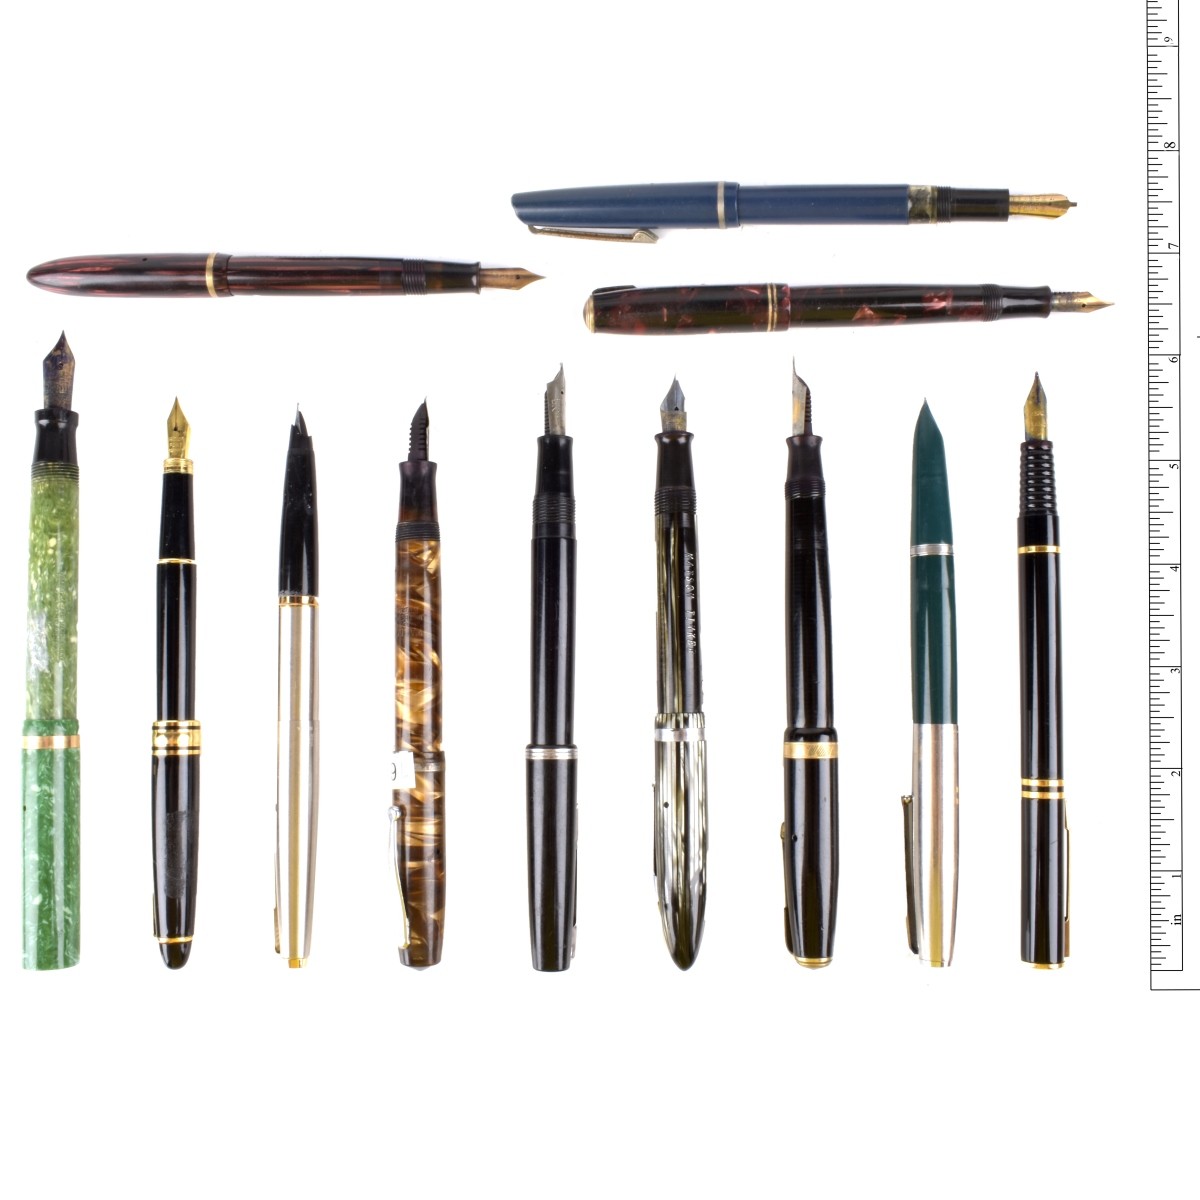 Twelve Vintage Fountain Pens